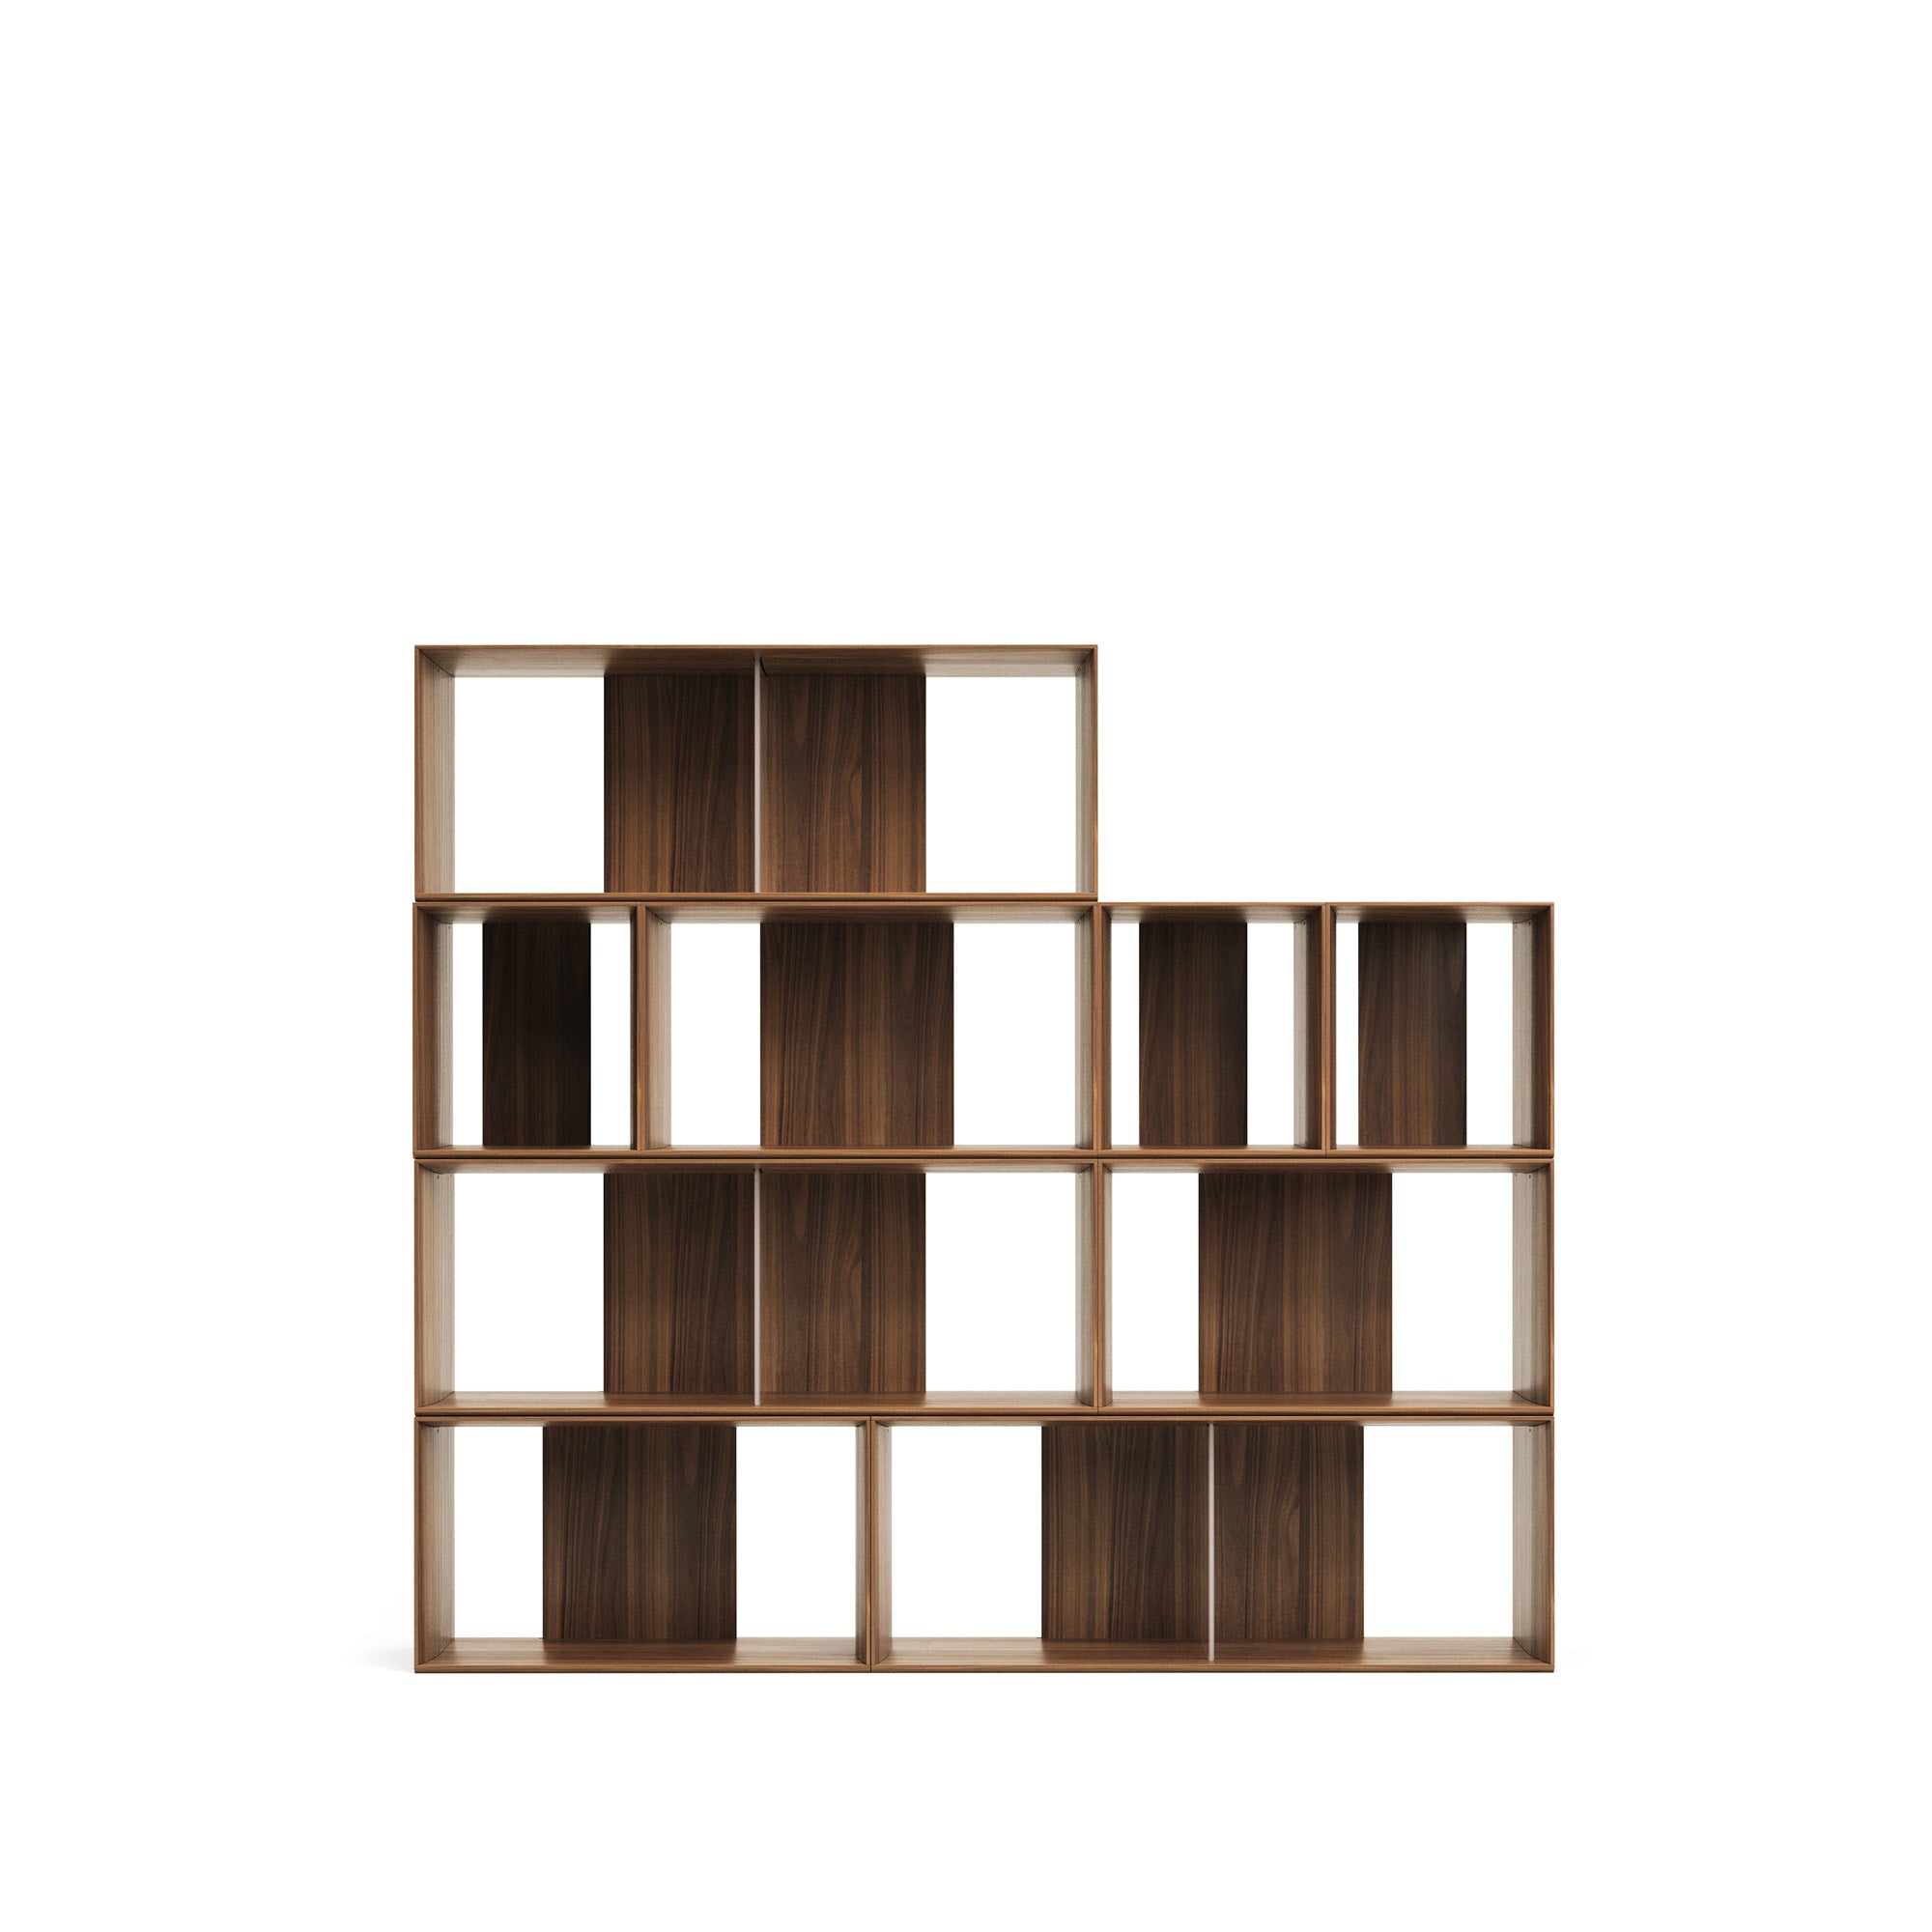 Litto set of 9 modular shelving units in walnut wood veneer, 202 x 114 cm